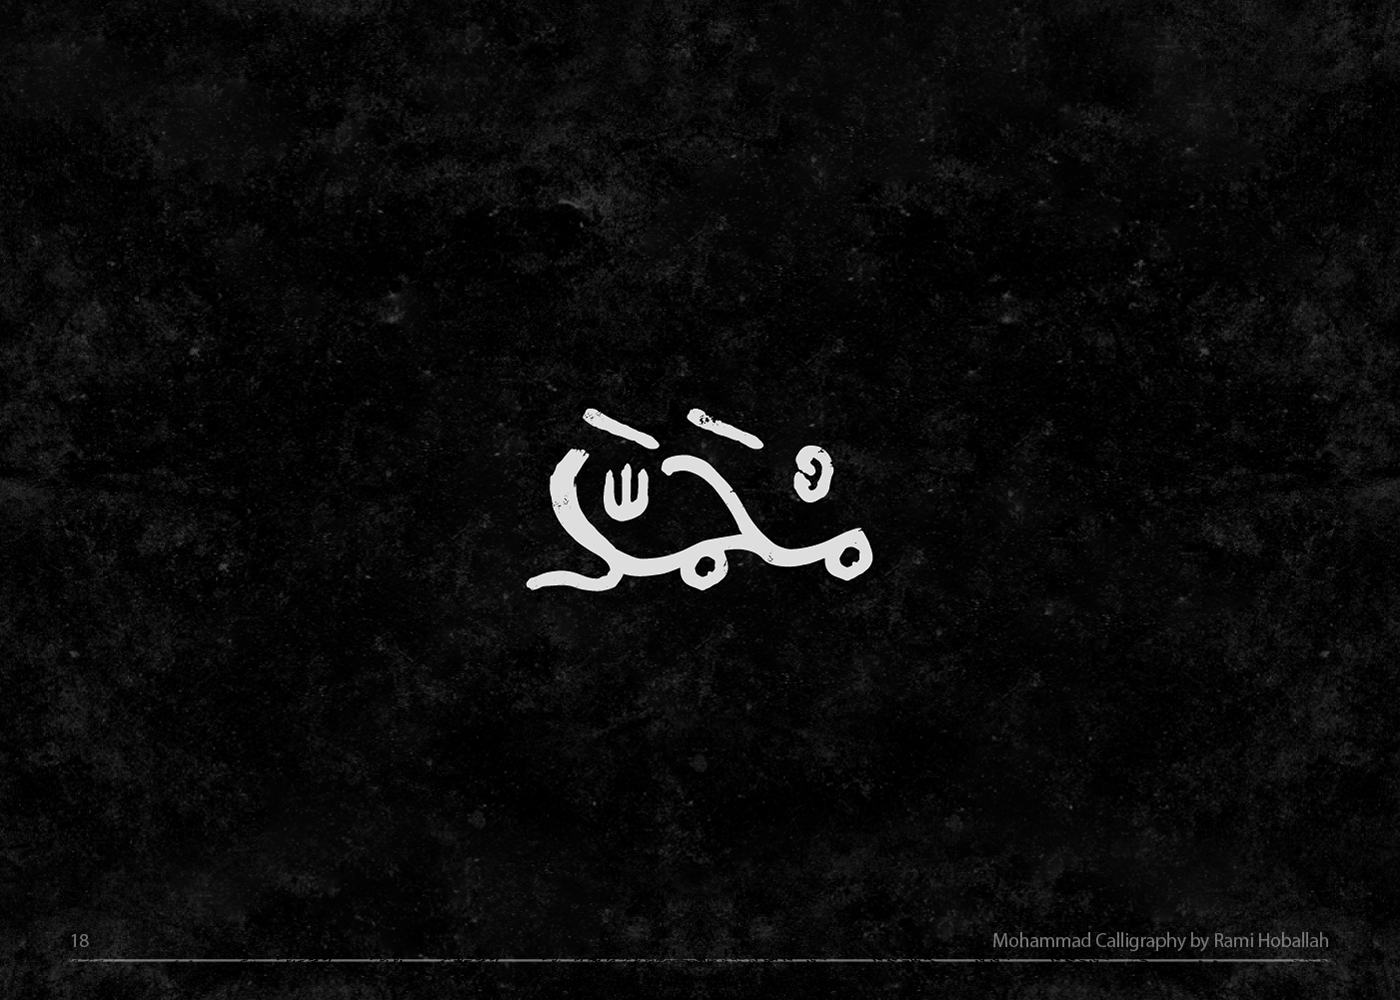 mohammad calligraphic arabic islamic arabian lebanon Kuwait black White name egypt Saudi muslim prophet passenger